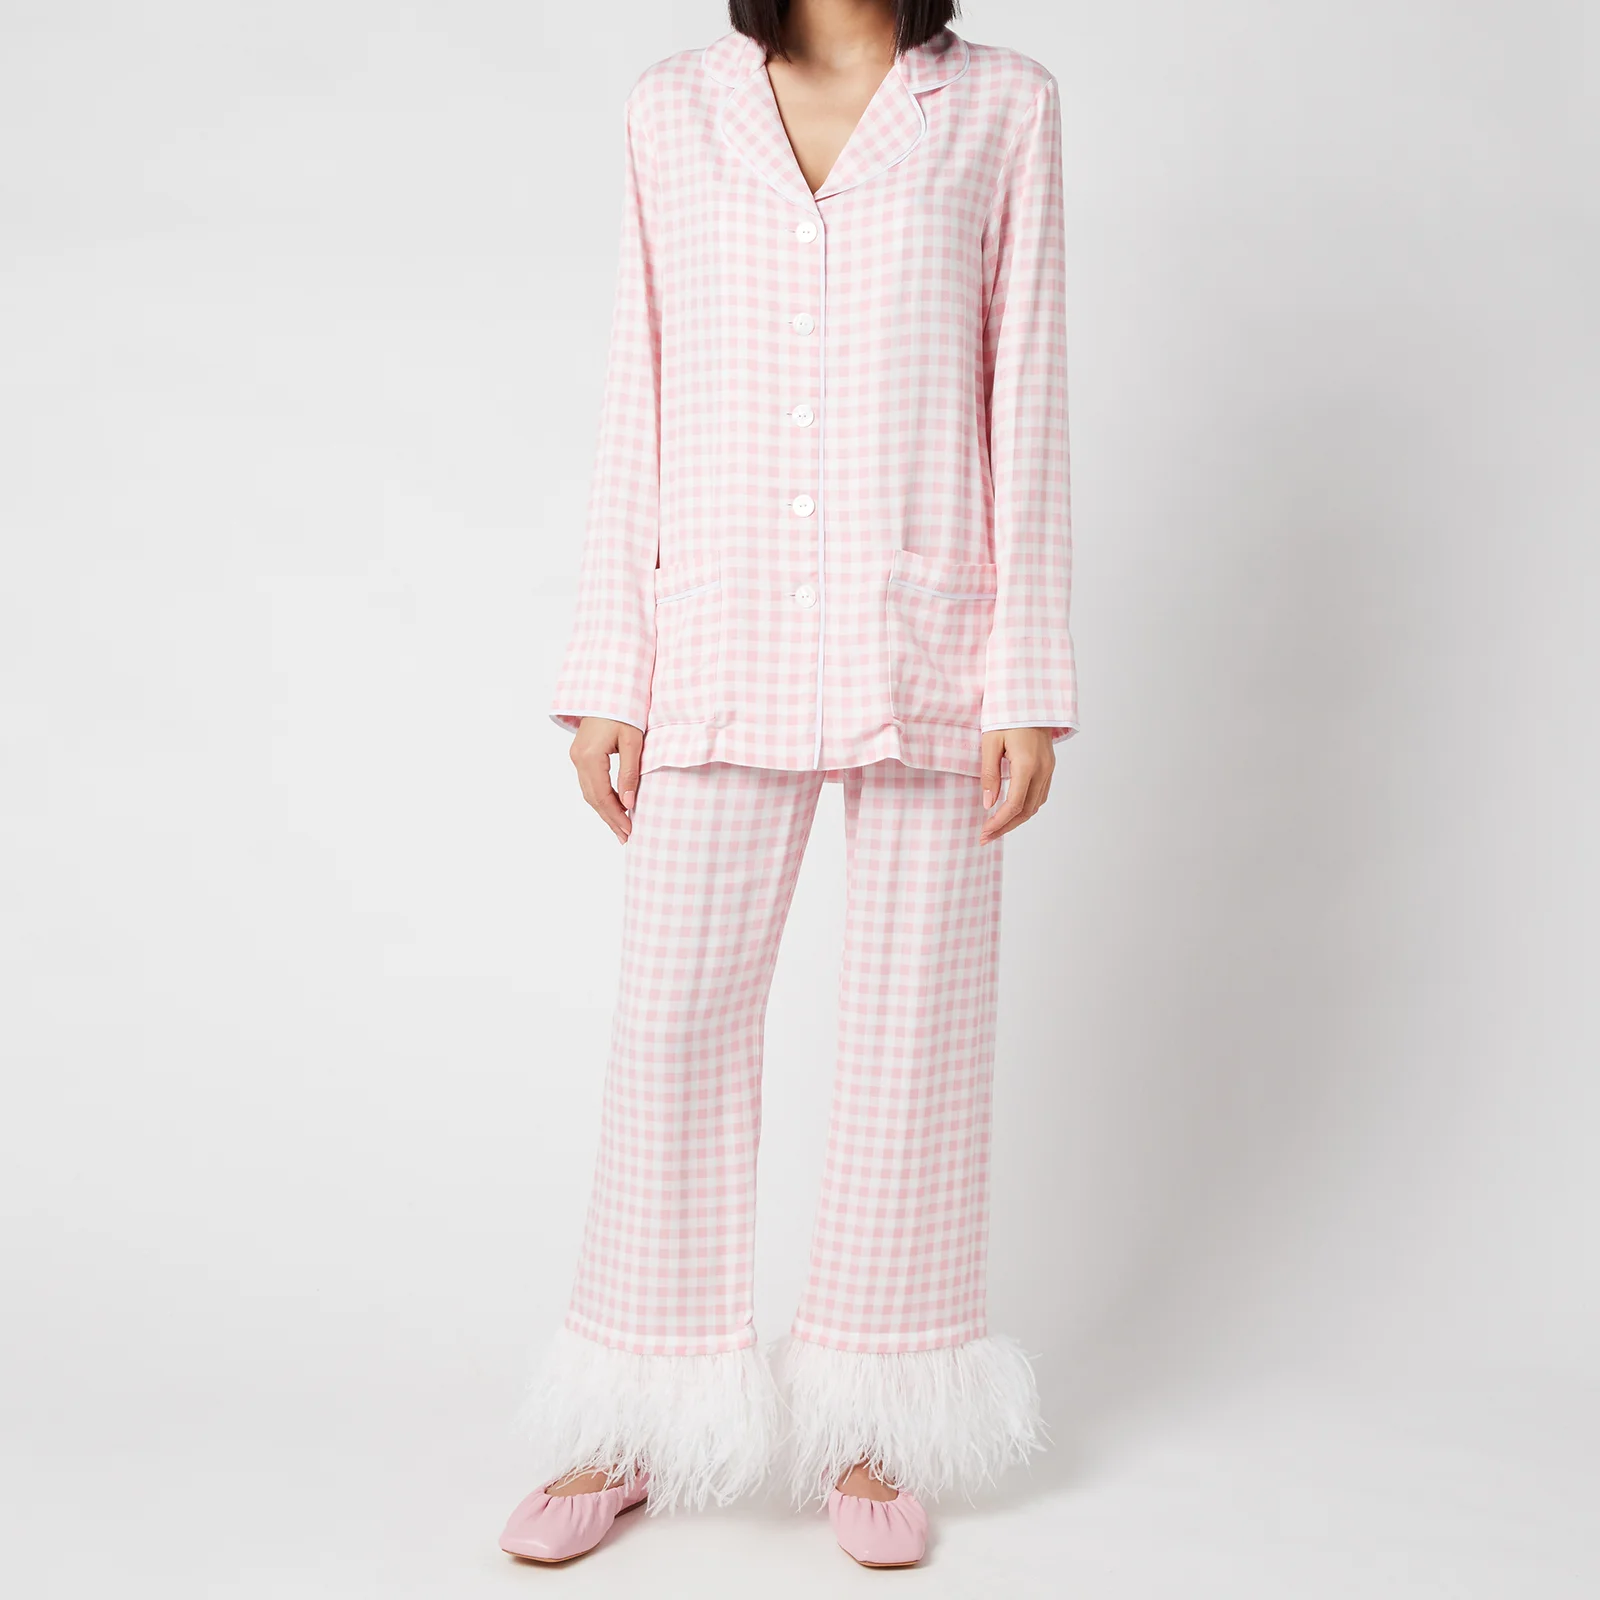 Sleeper Women's Party Pyjama Set with Feathers - Pink Image 1